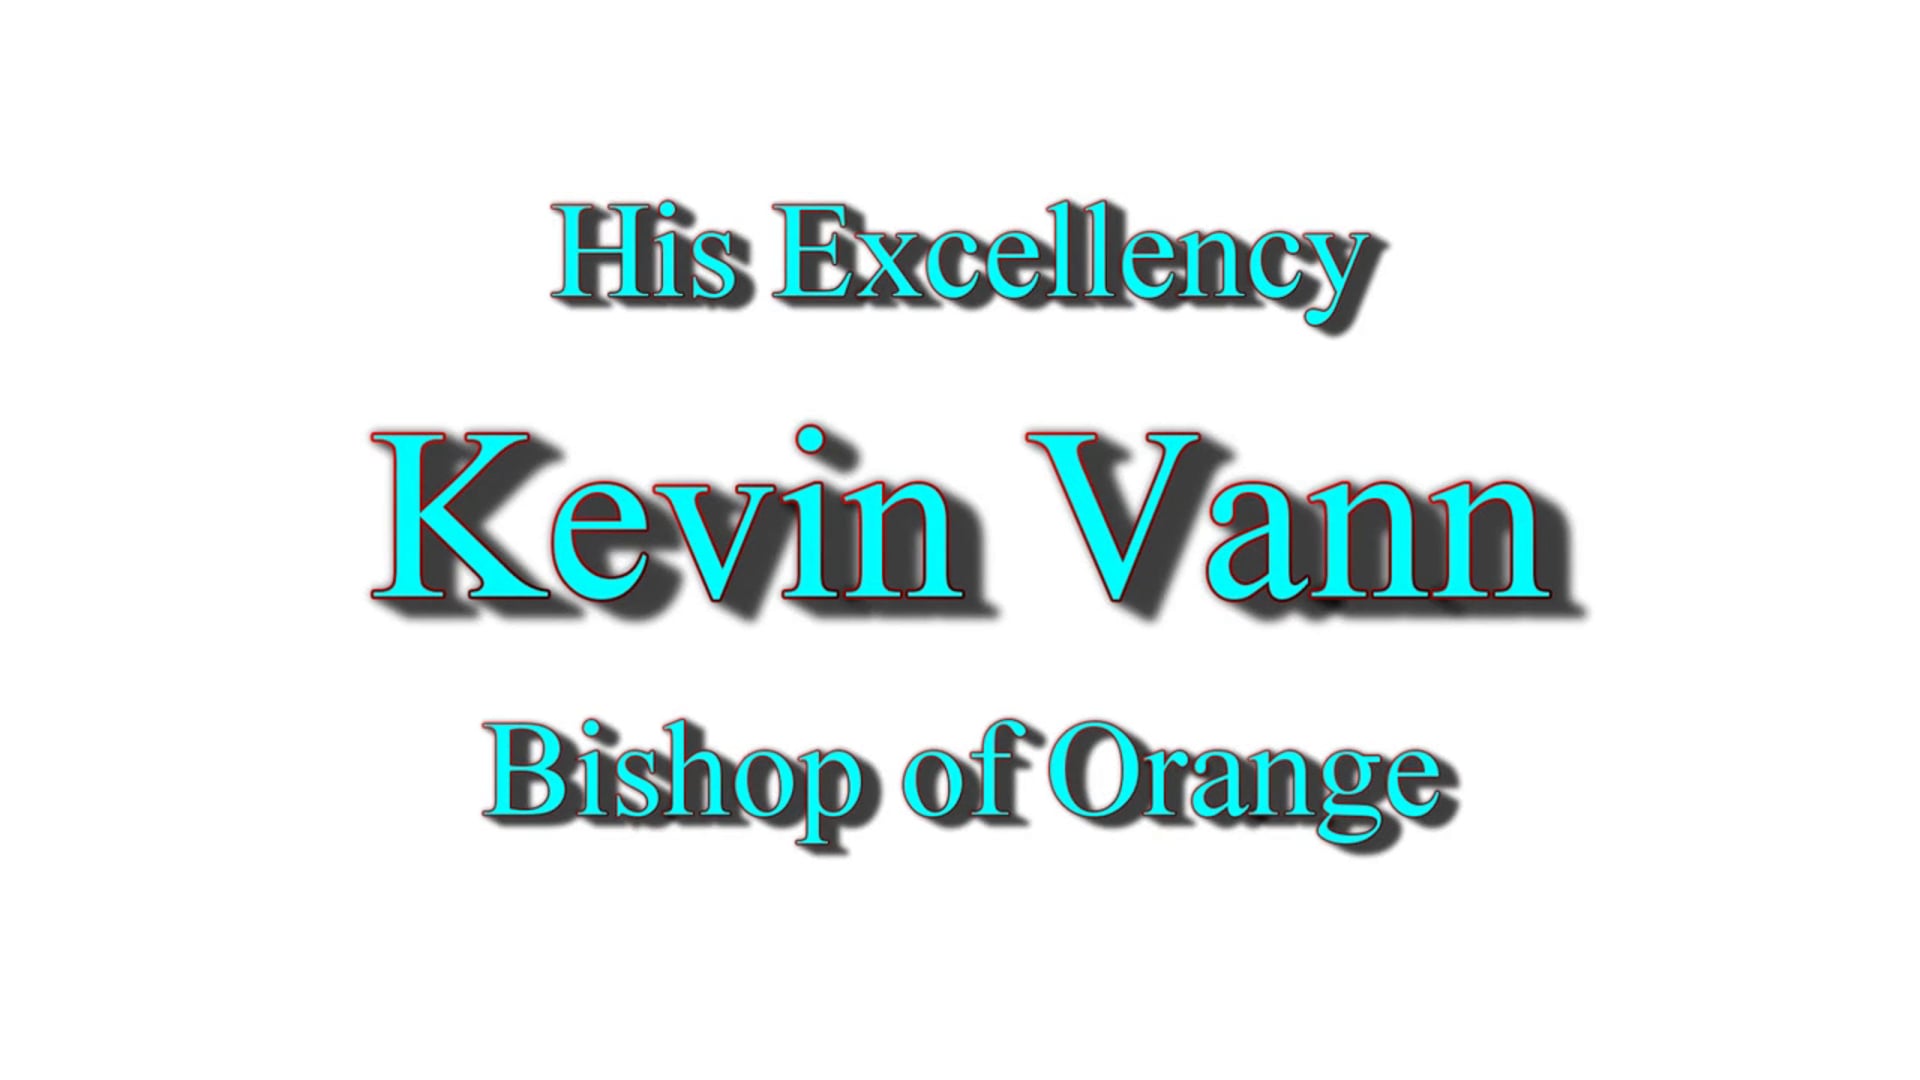 Bishop Vann for Internet